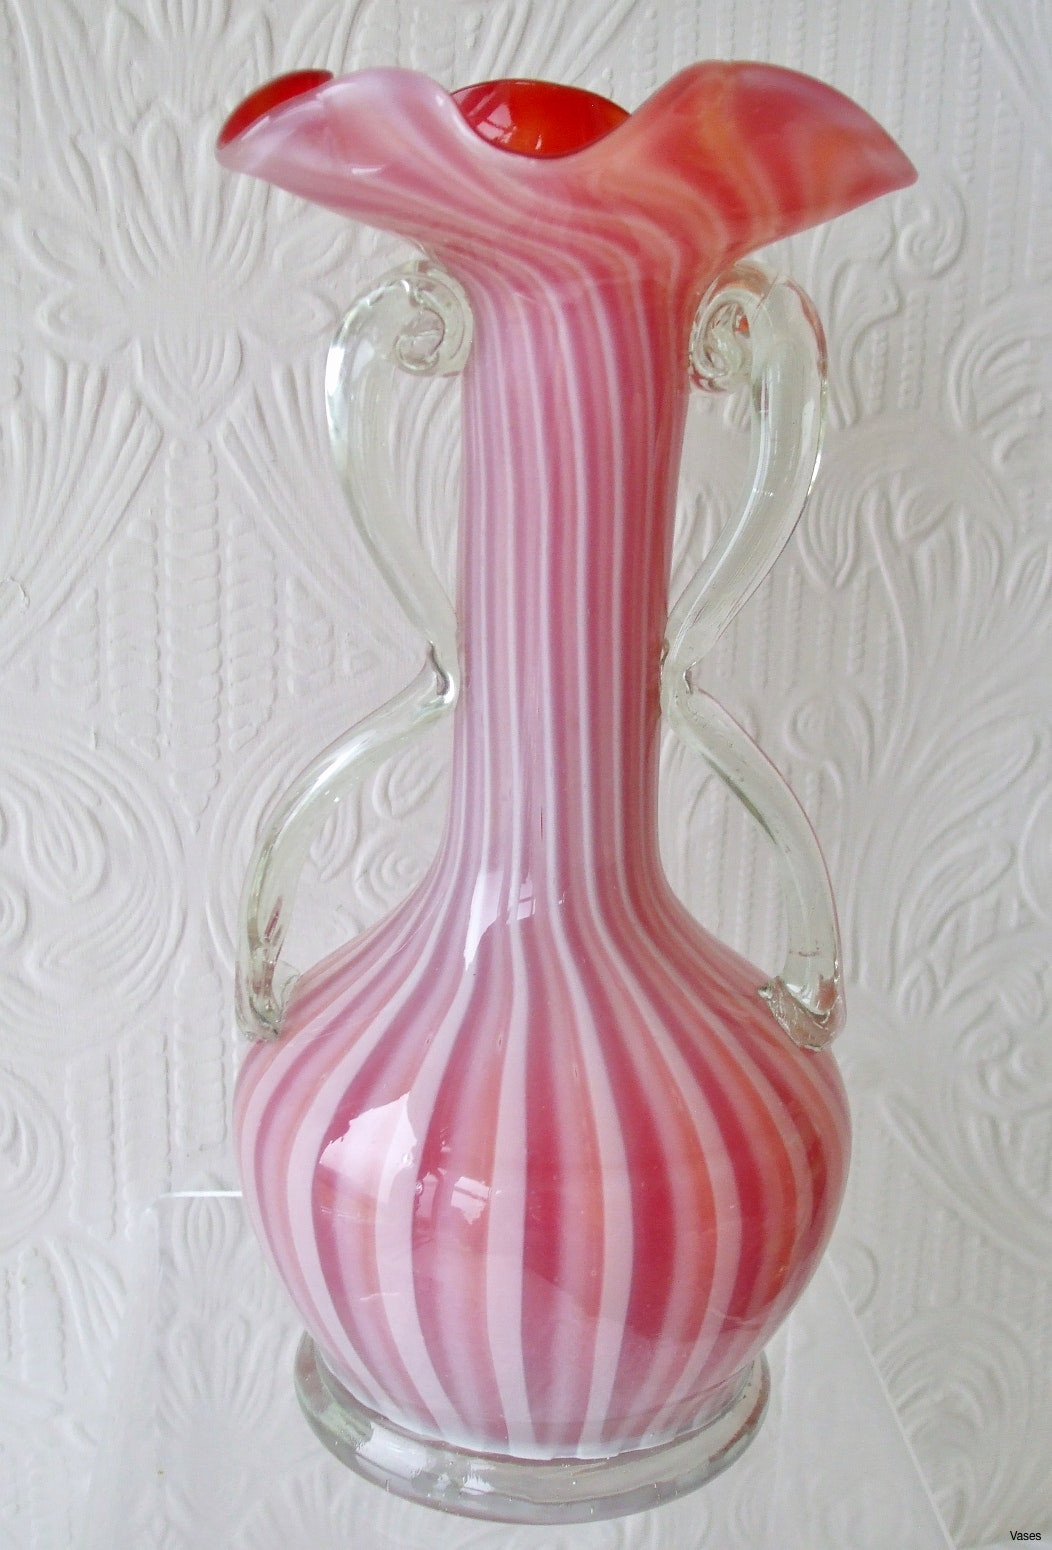 pink murano glass vase of 18 luxury italian blown glass vase bogekompresorturkiye com in murano glas vasen luxus murano glass vaseh vases vintage sommerso art vase 1960si 0d